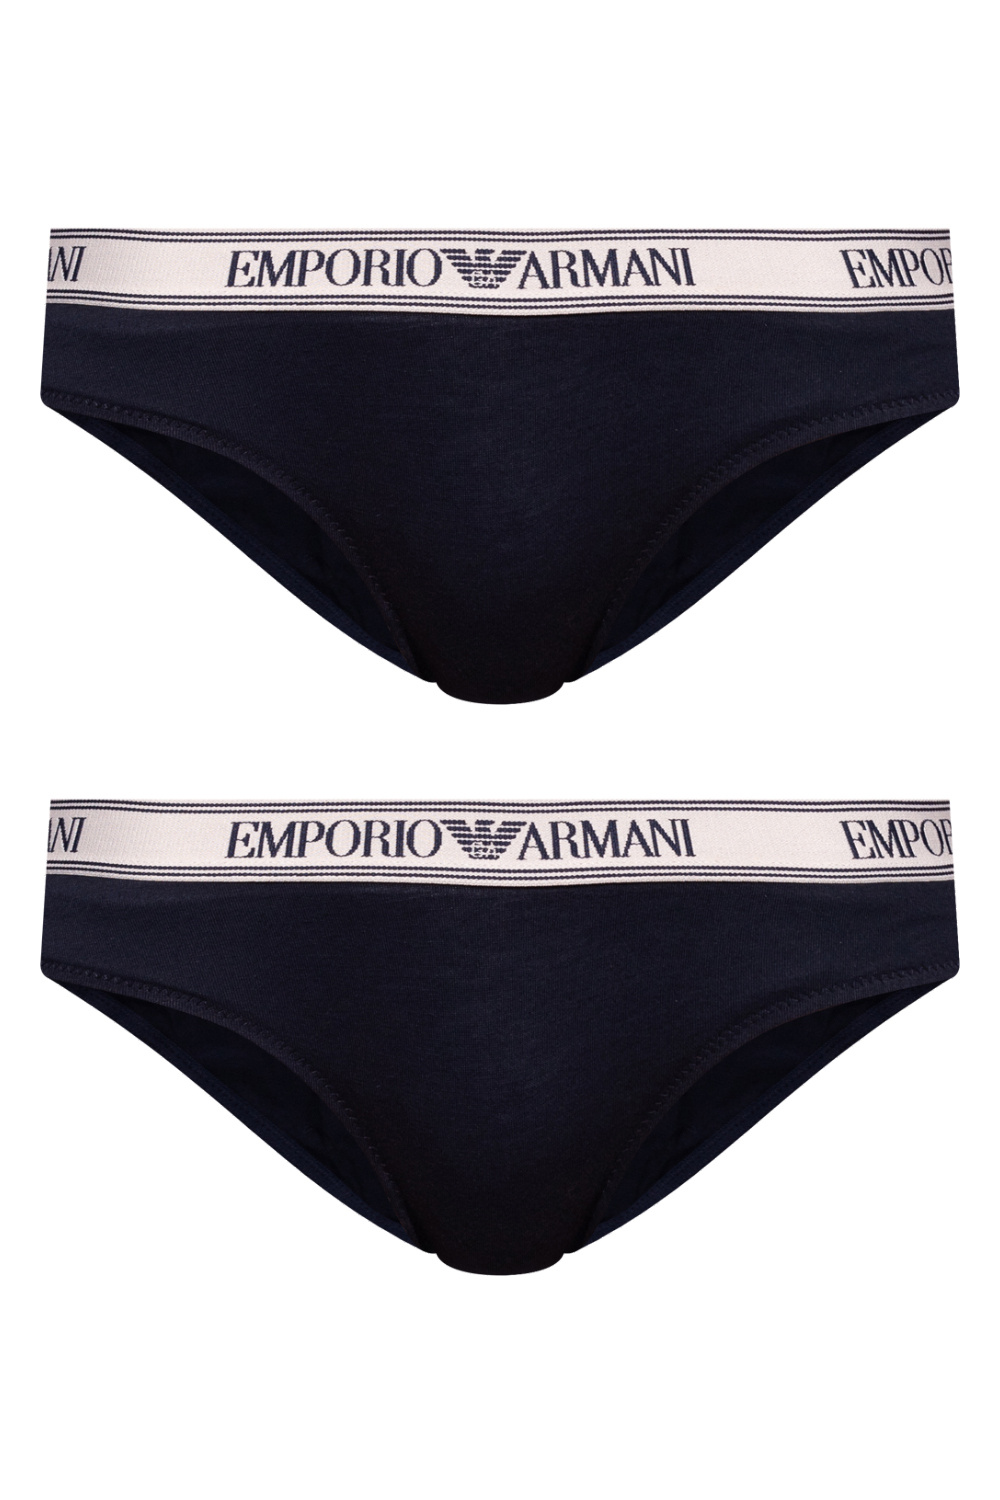 Emporio armani Cap Branded briefs two-pack